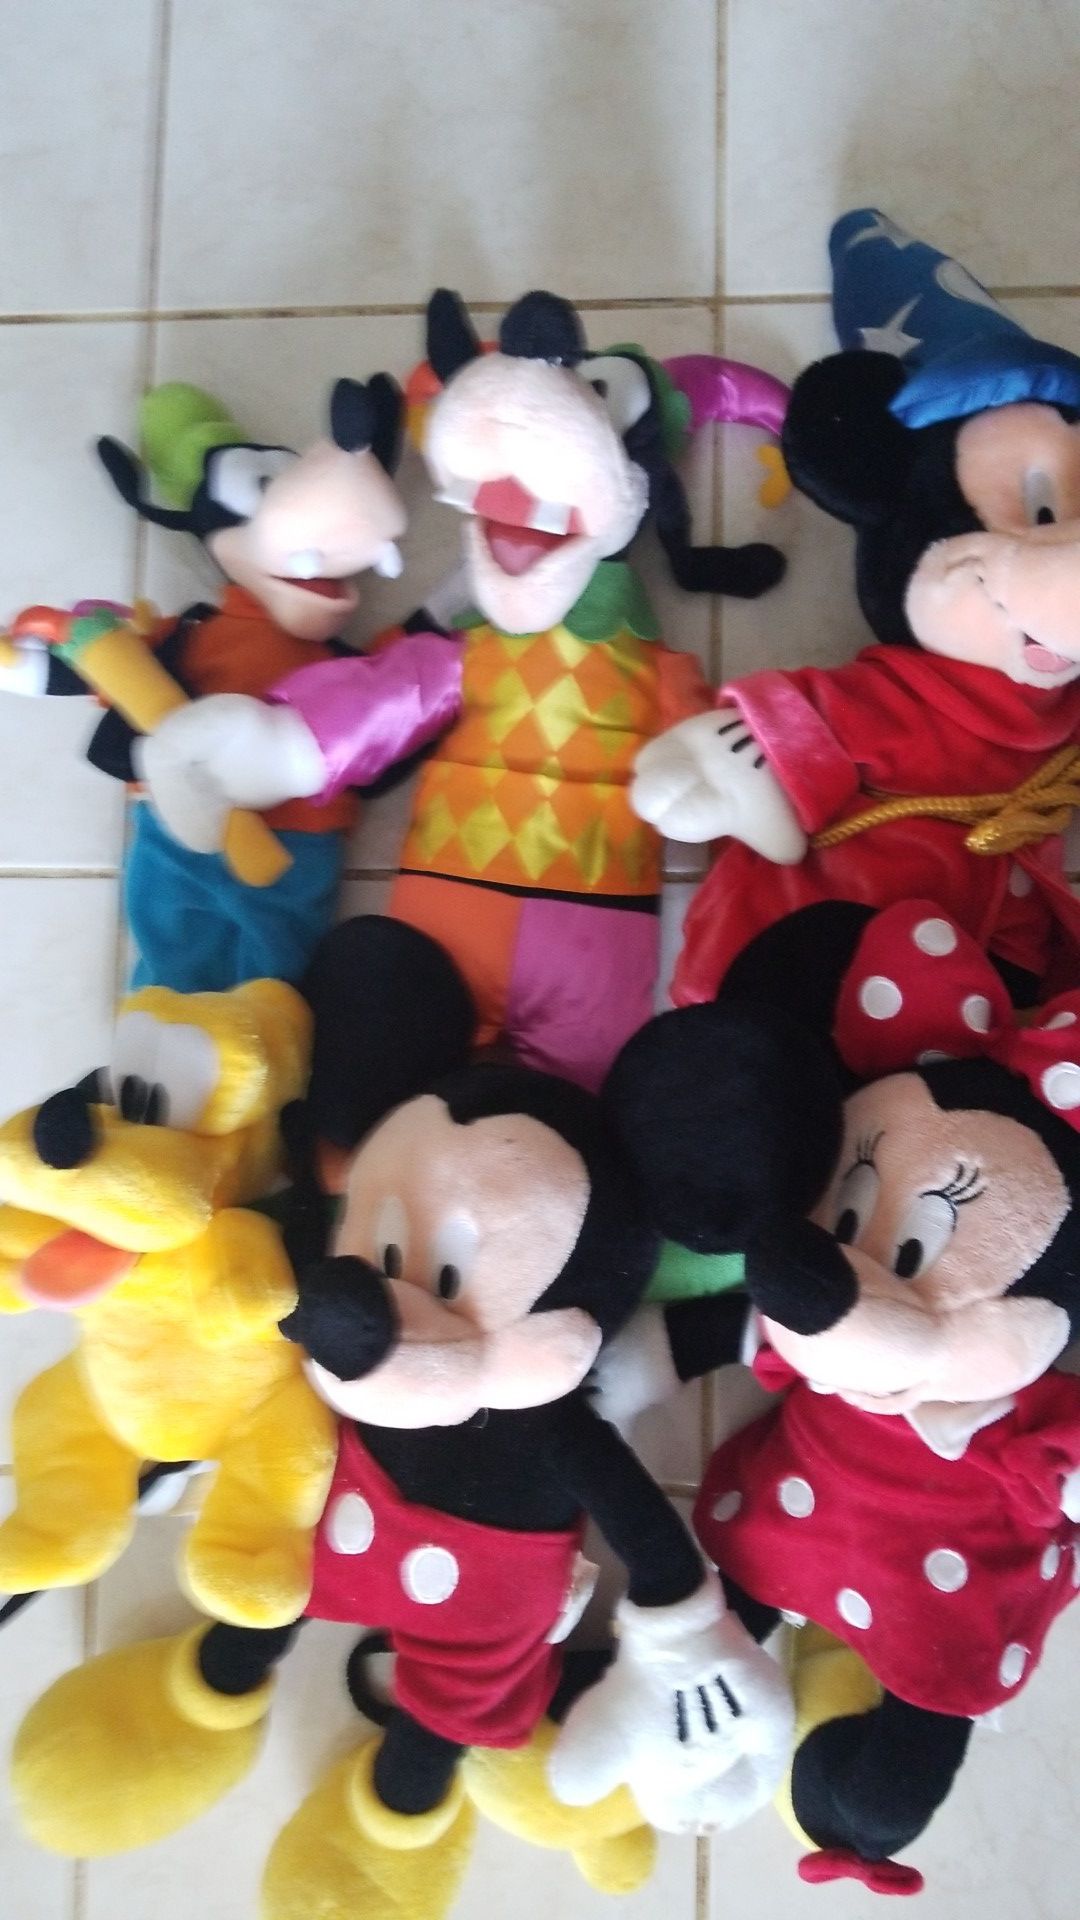 Disney plush toys all for $5